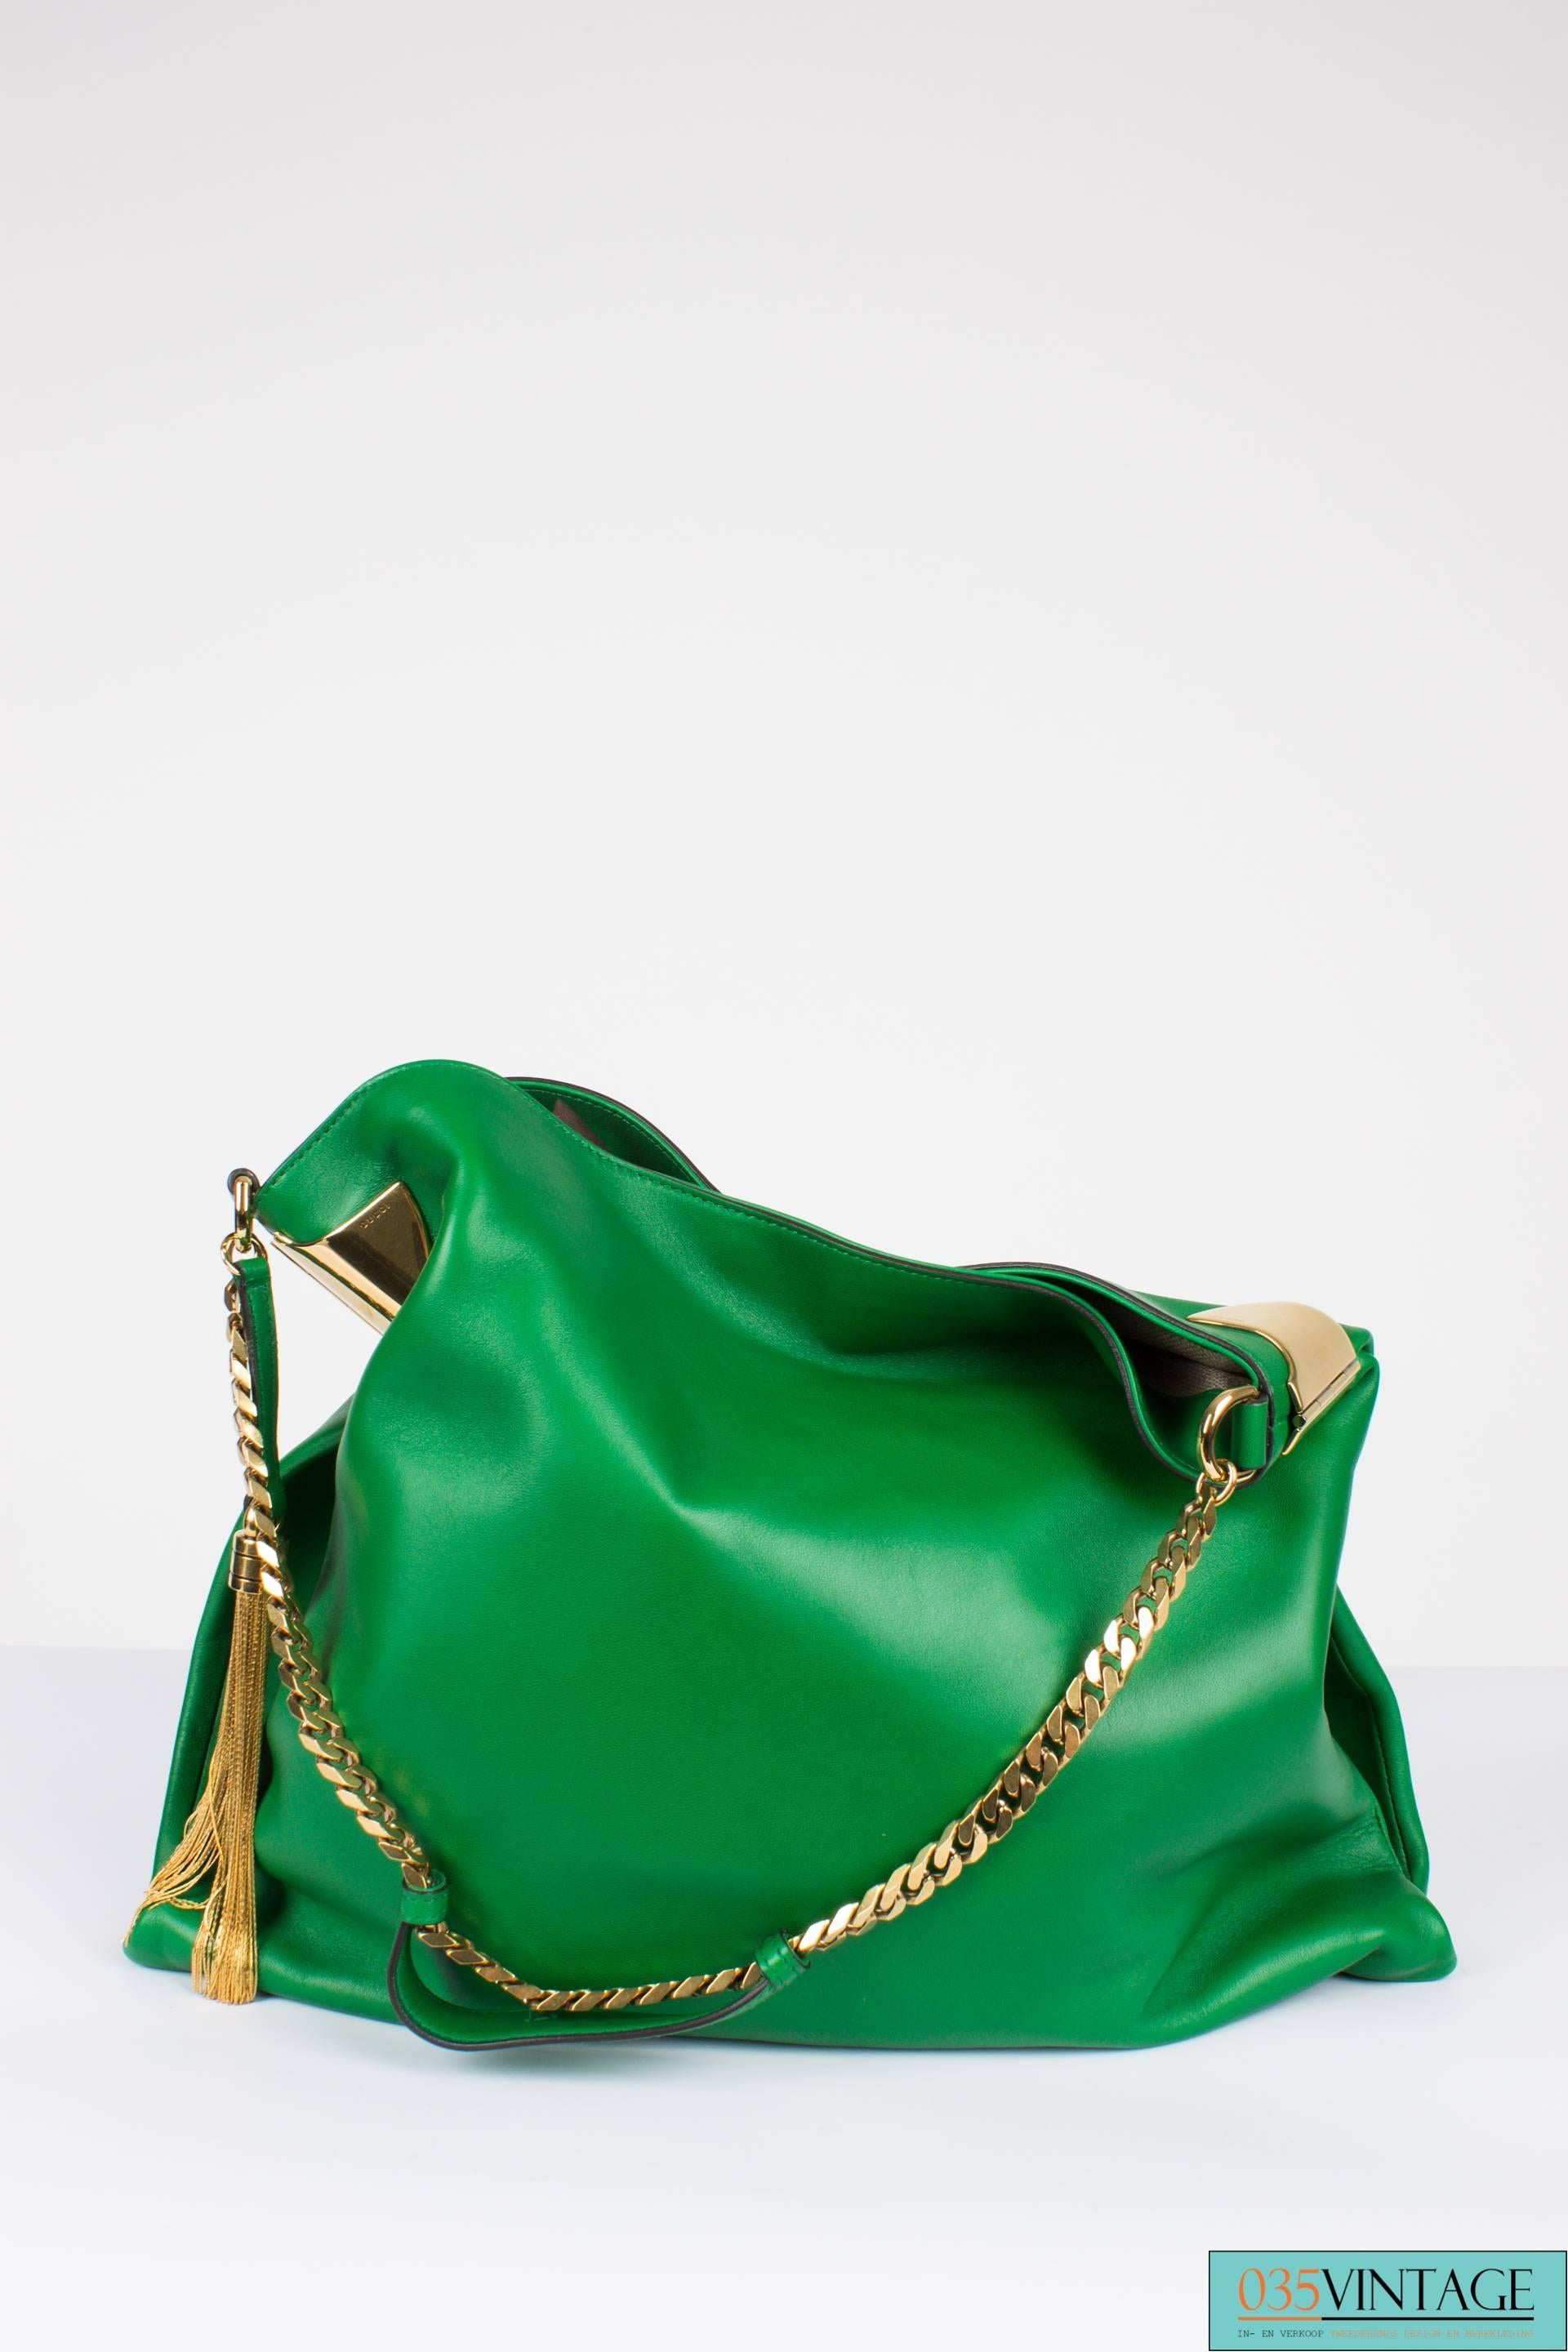 Women's Gucci 1970 Medium Shoulder Bag - green leather/gold